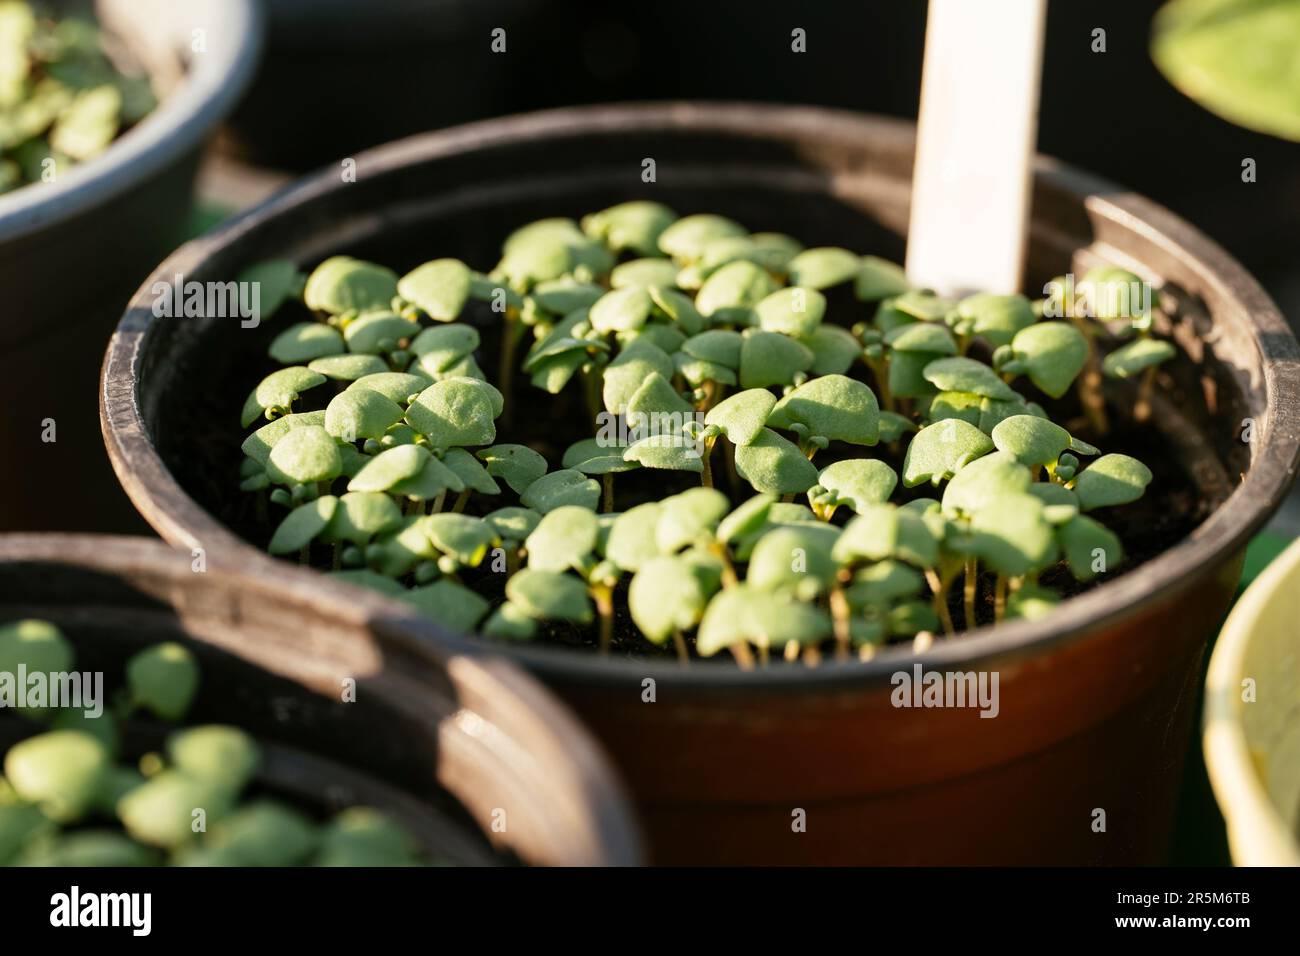 Lemon basil seedlings growing in a pot. Stock Photo